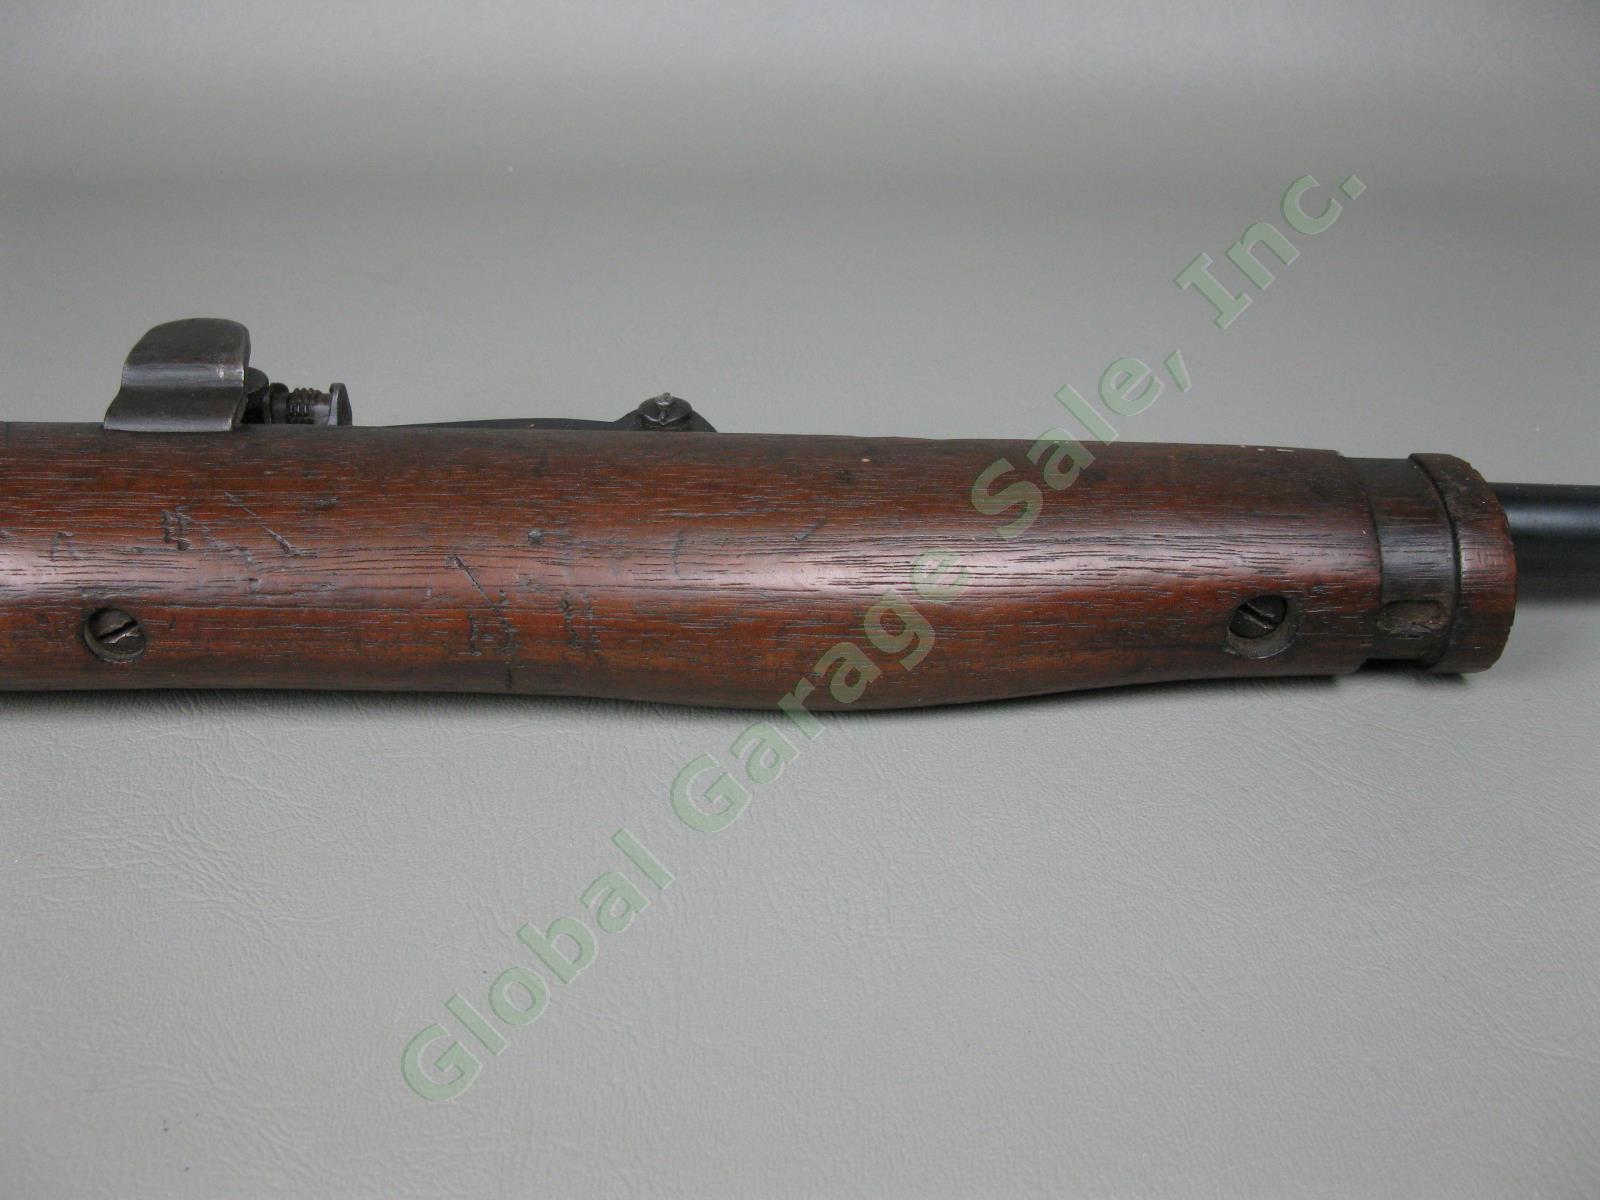 Rare WWI Lee-Enfield British Military Rifle GB 1917 SMLE SHT LE Mk III 27